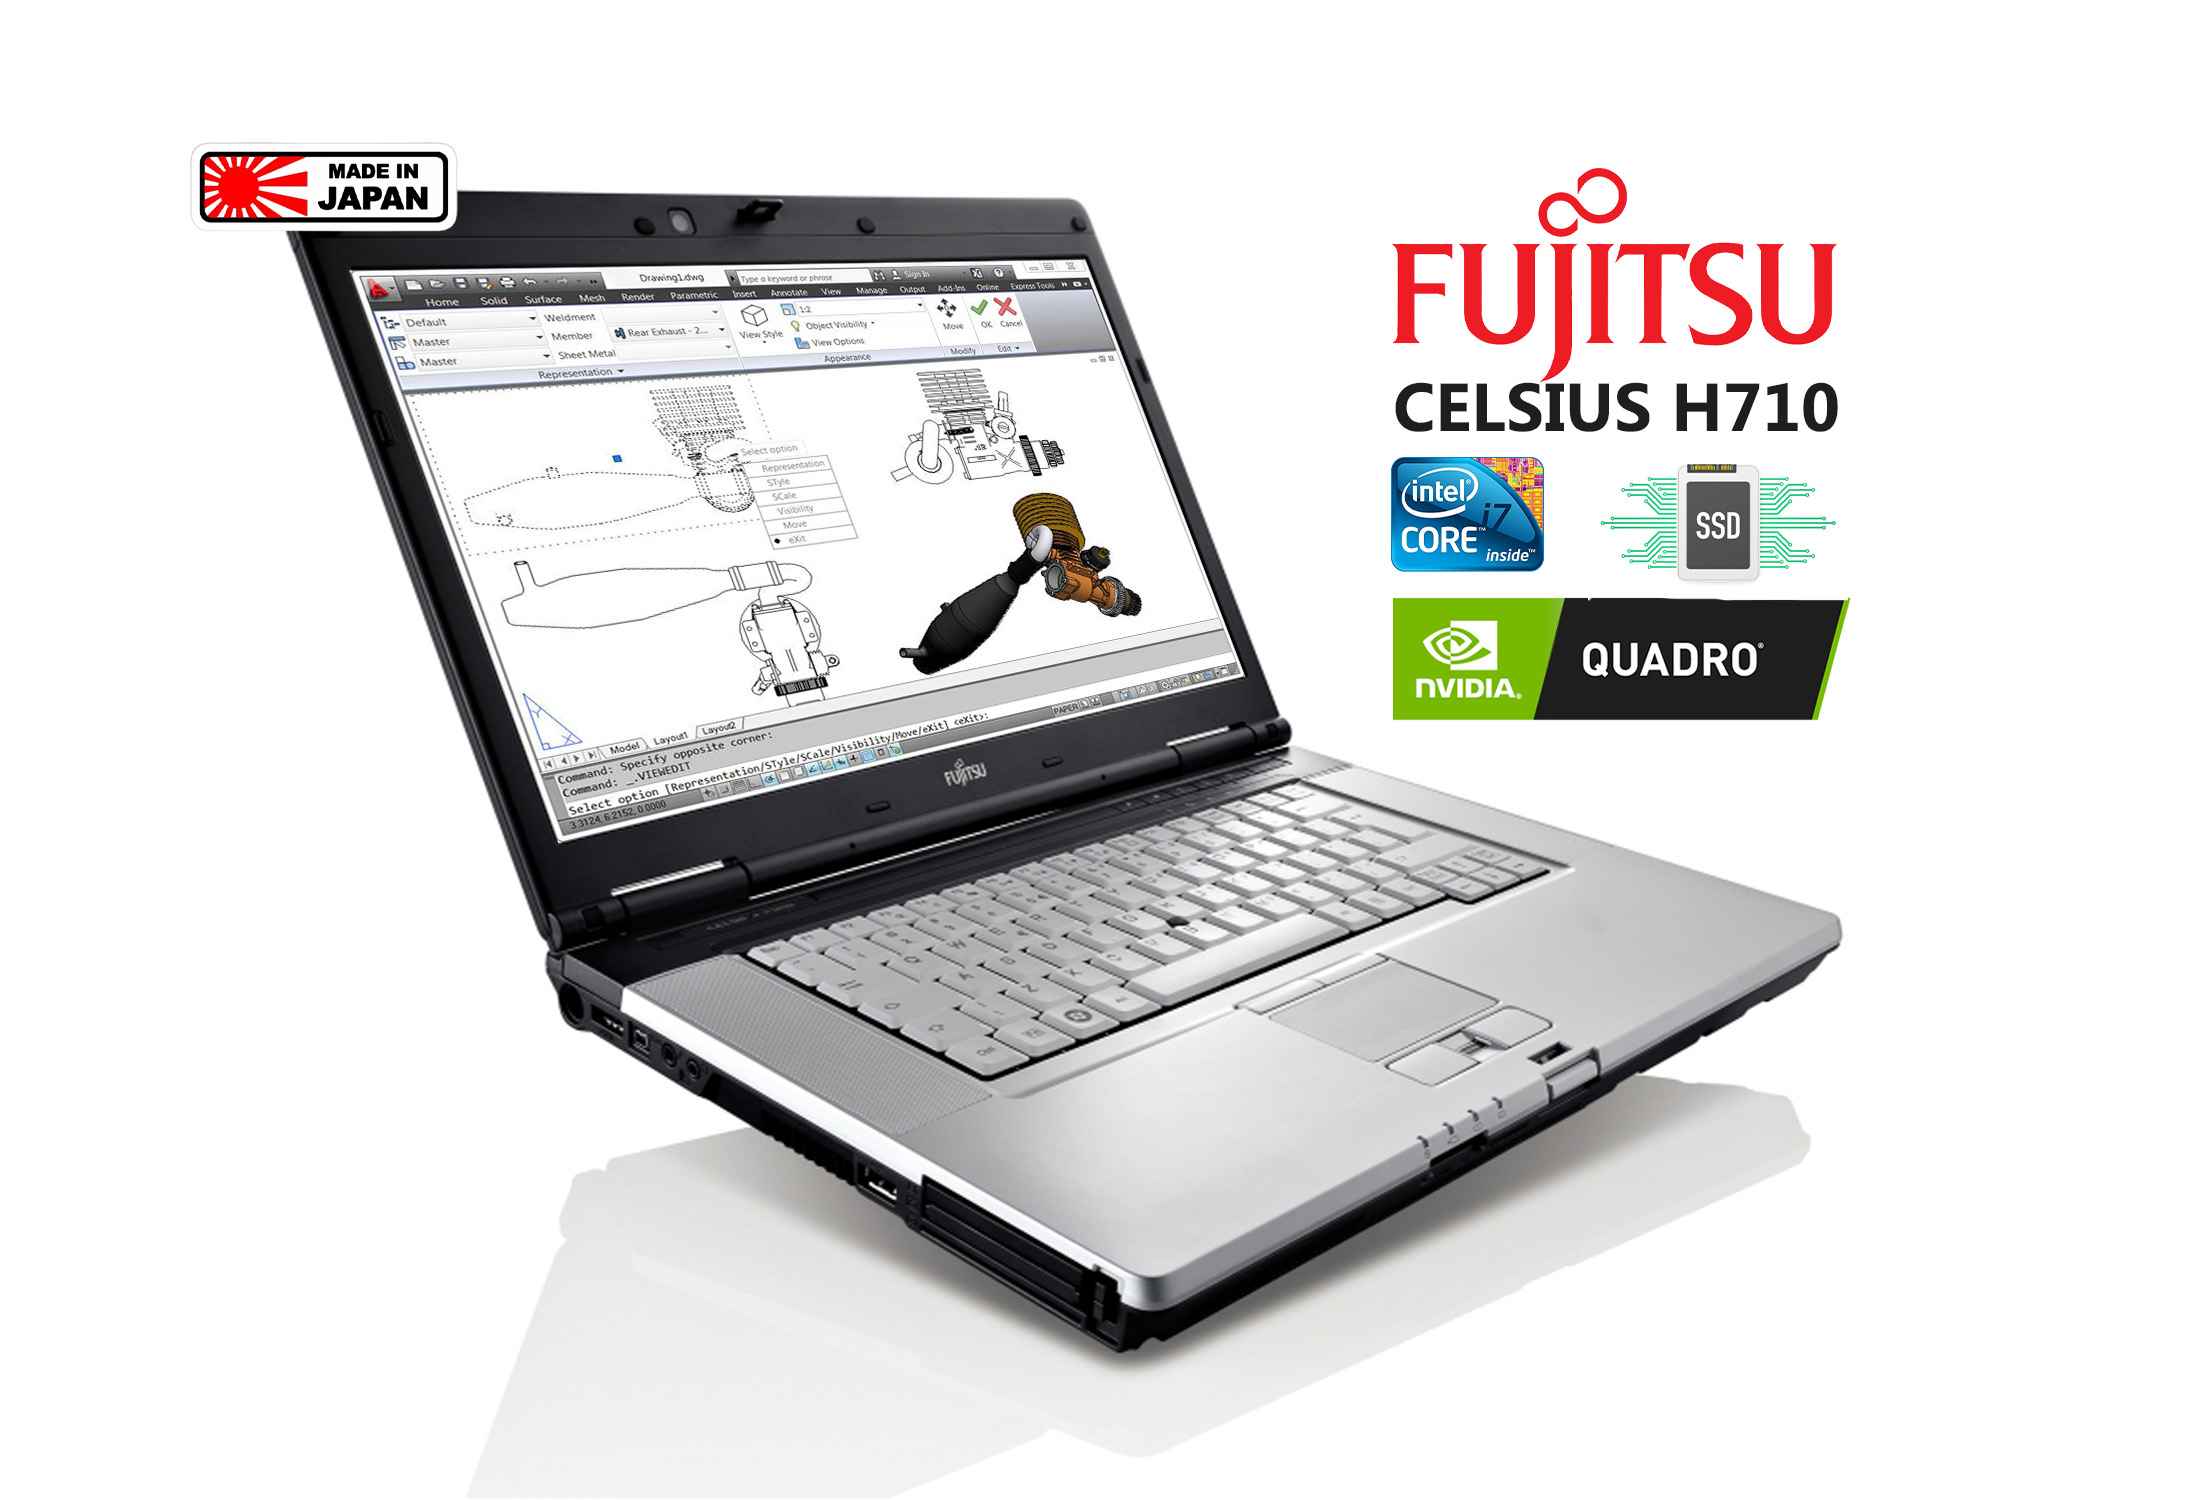 Fujitsu Celsius H710 i7-2640M 256GB SSD Quadro 1000M Camera-dC0Mb.jpeg